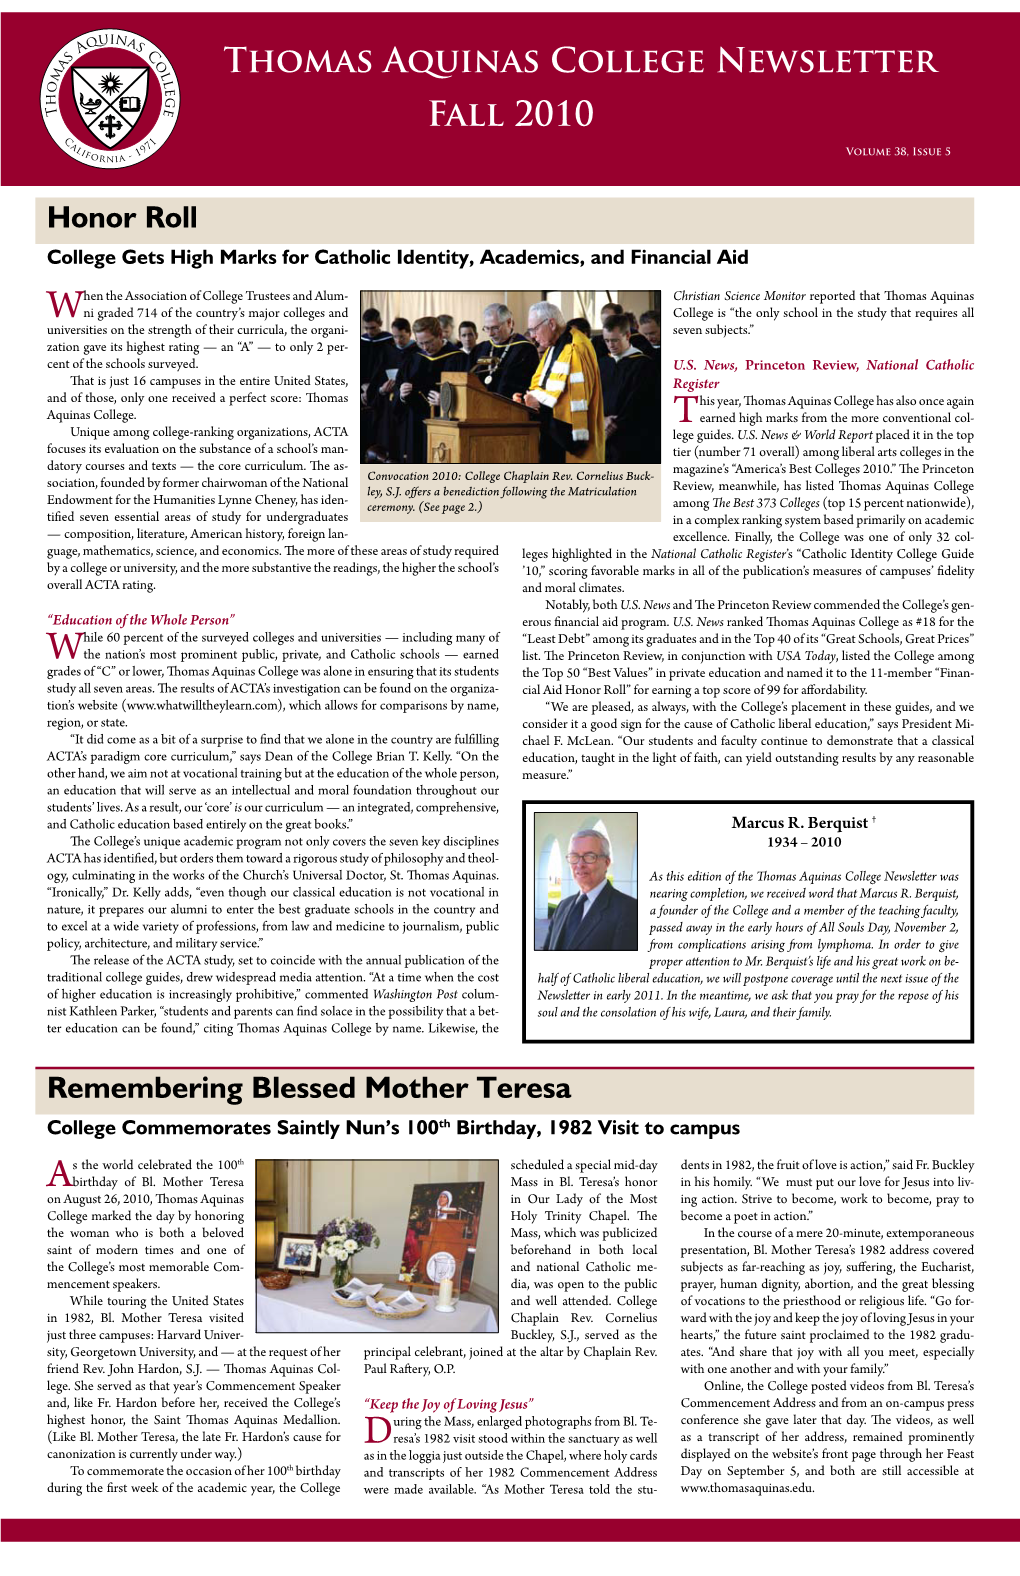 Thomas Aquinas College Newsletter Fall 2010